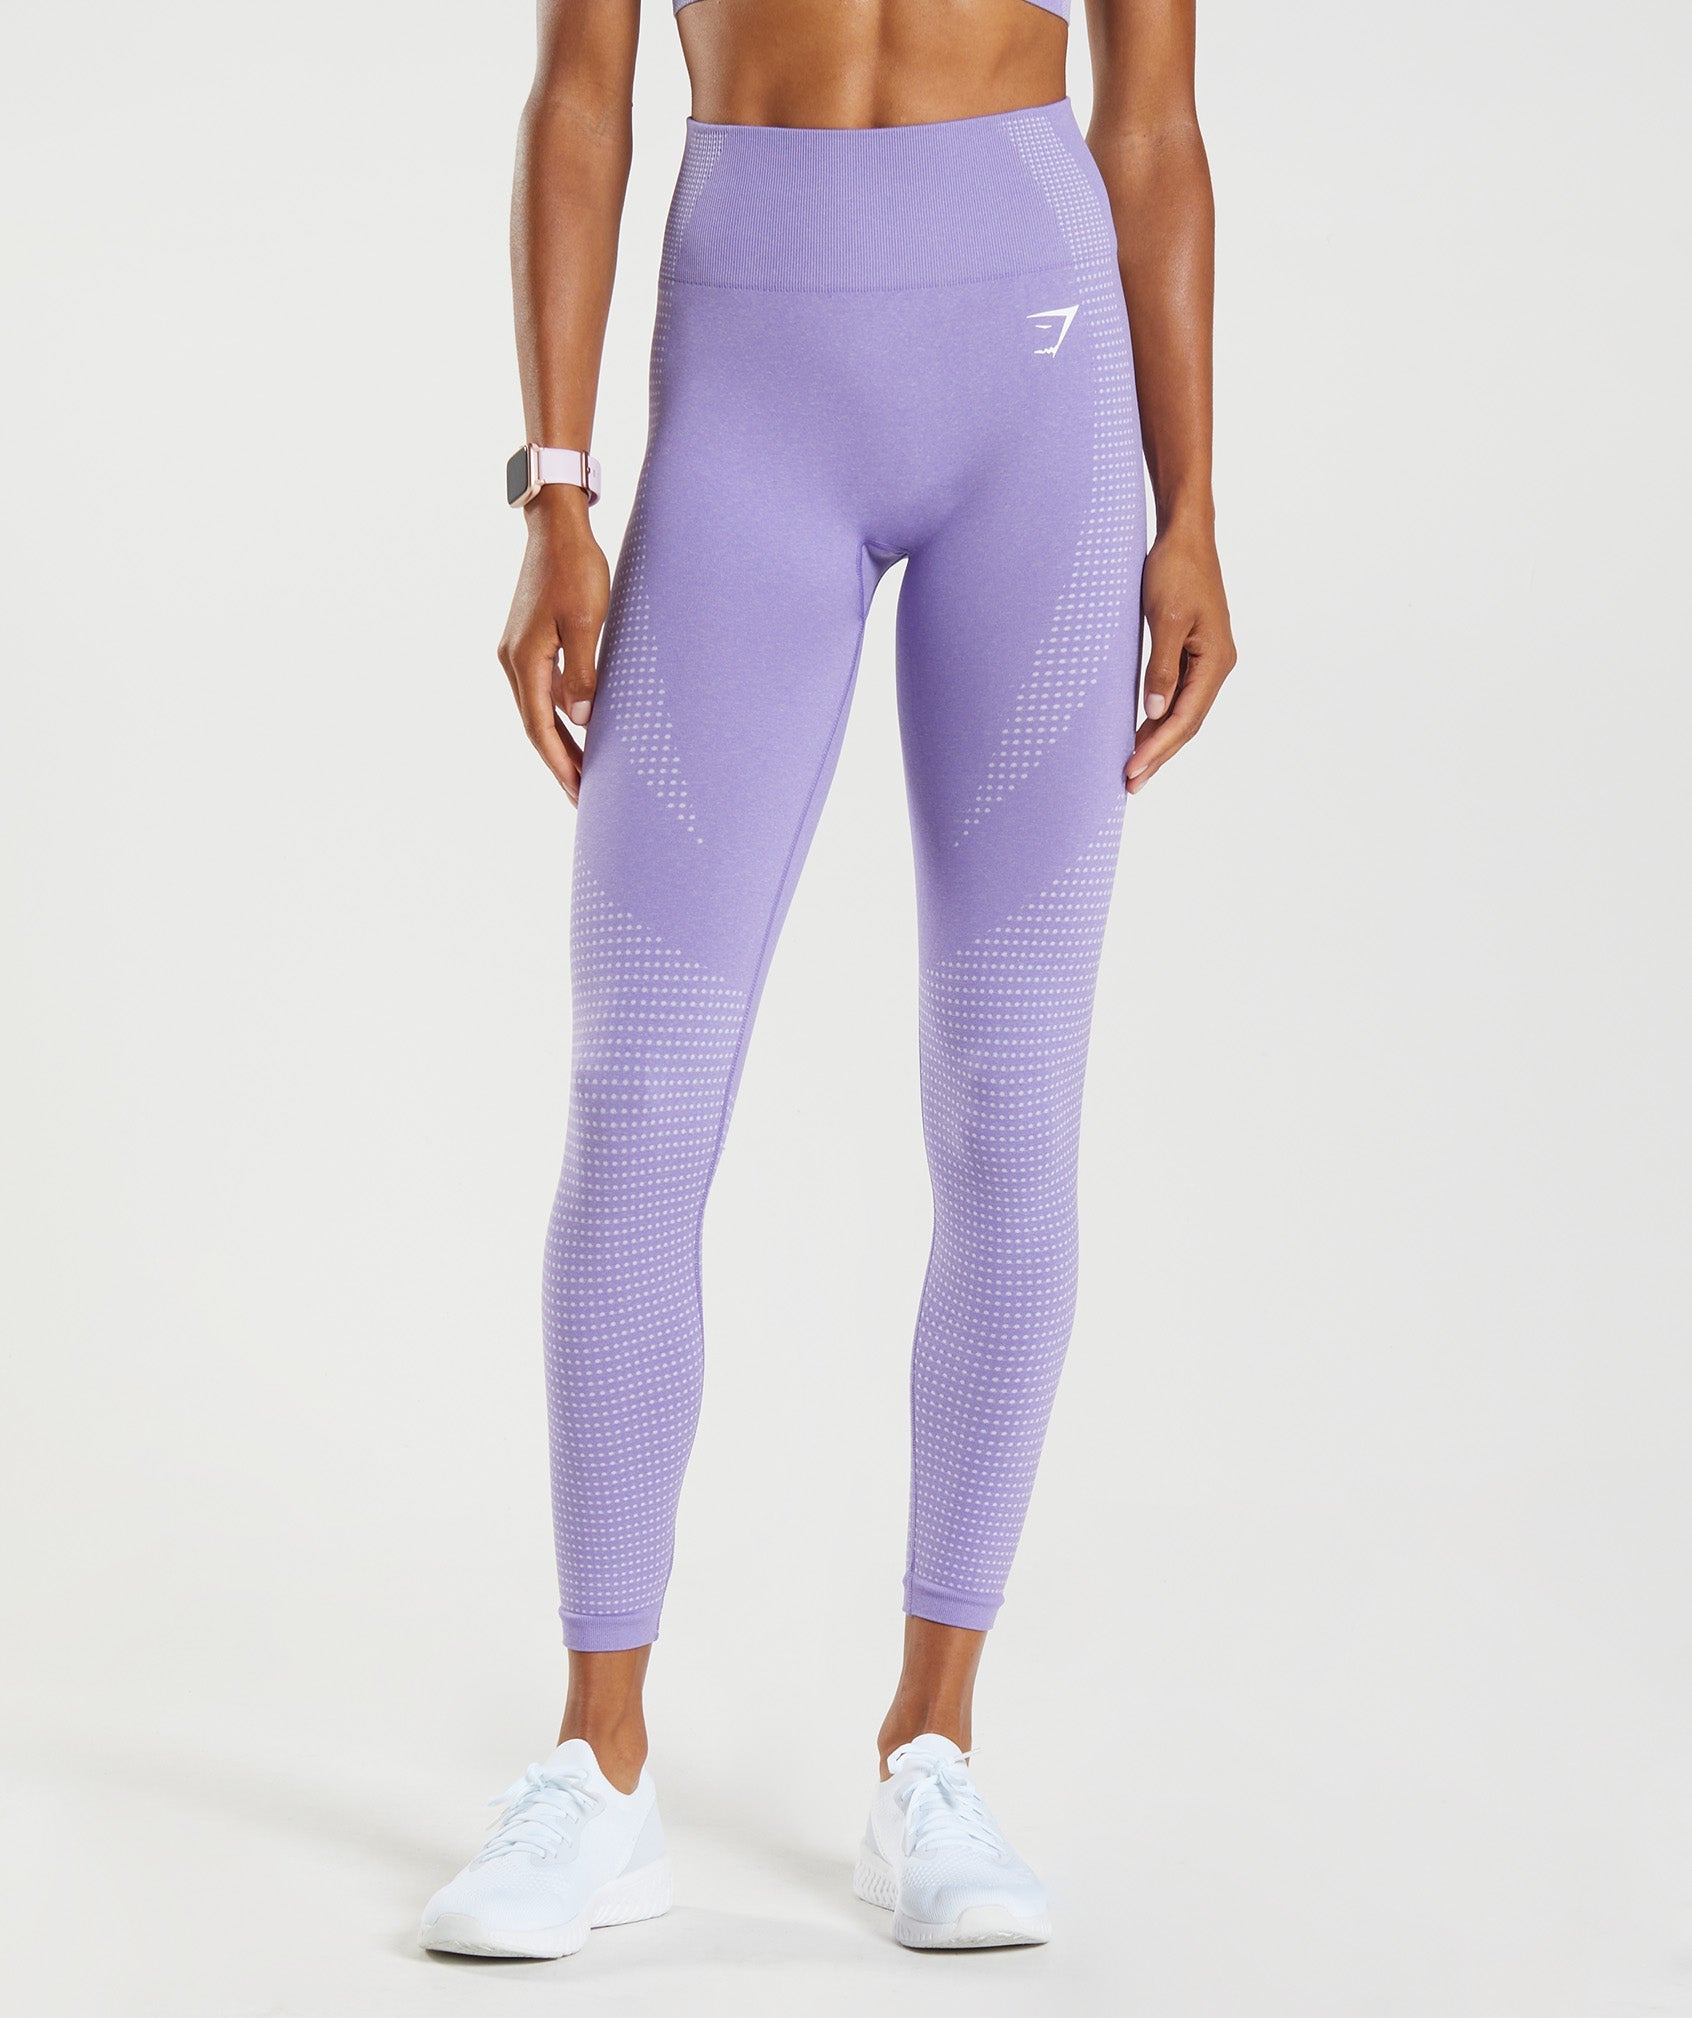 Gymshark Women's XS Purple Compression Seamless Leggings Yoga Gym